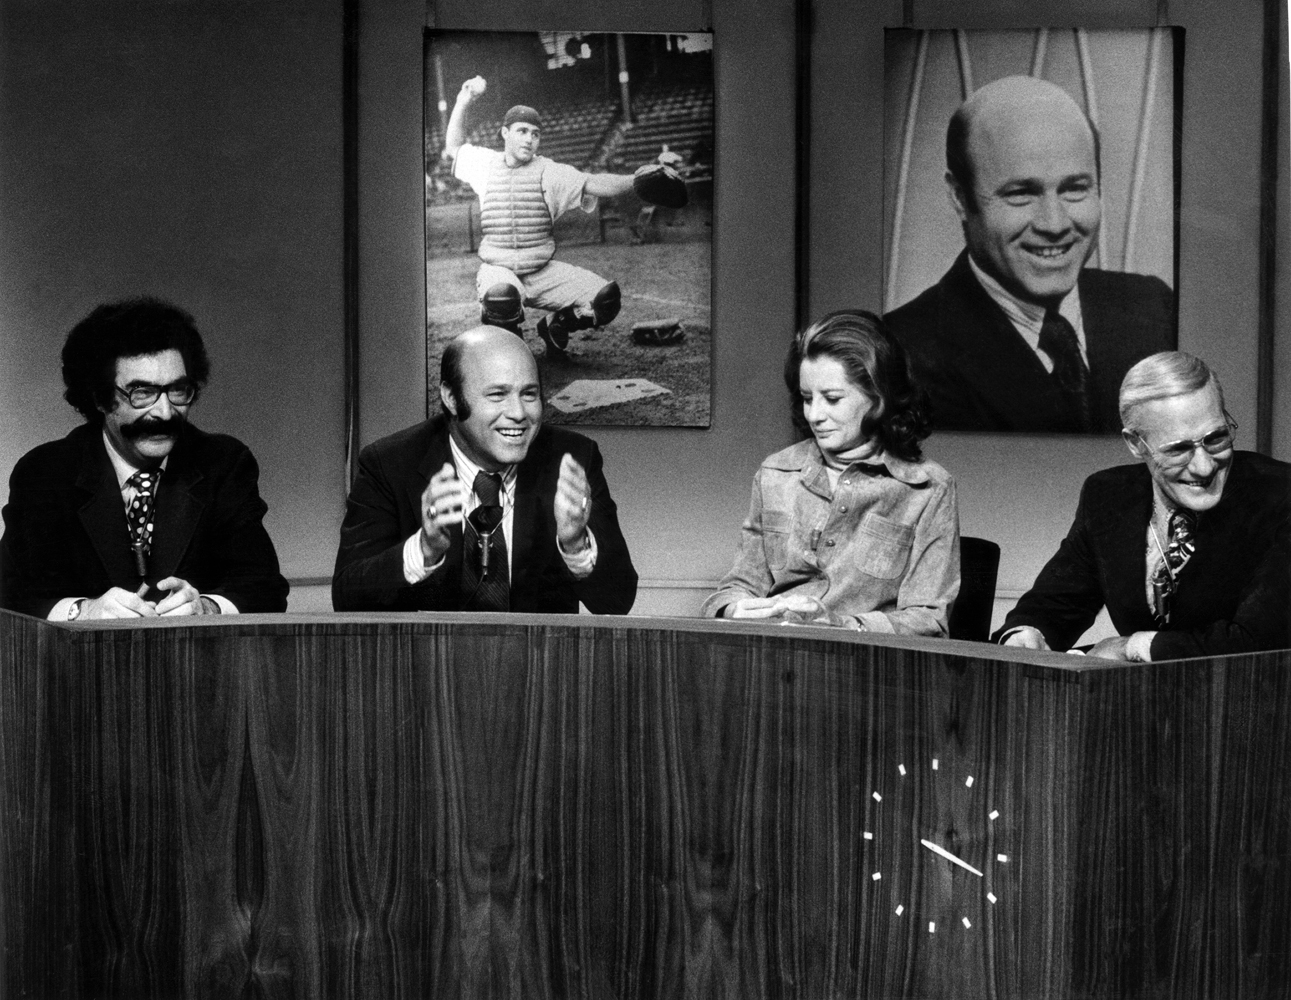 From left: Gene Shalit, Joe Garagiola, Barbara Walters,and Frank McGee on NBC News.